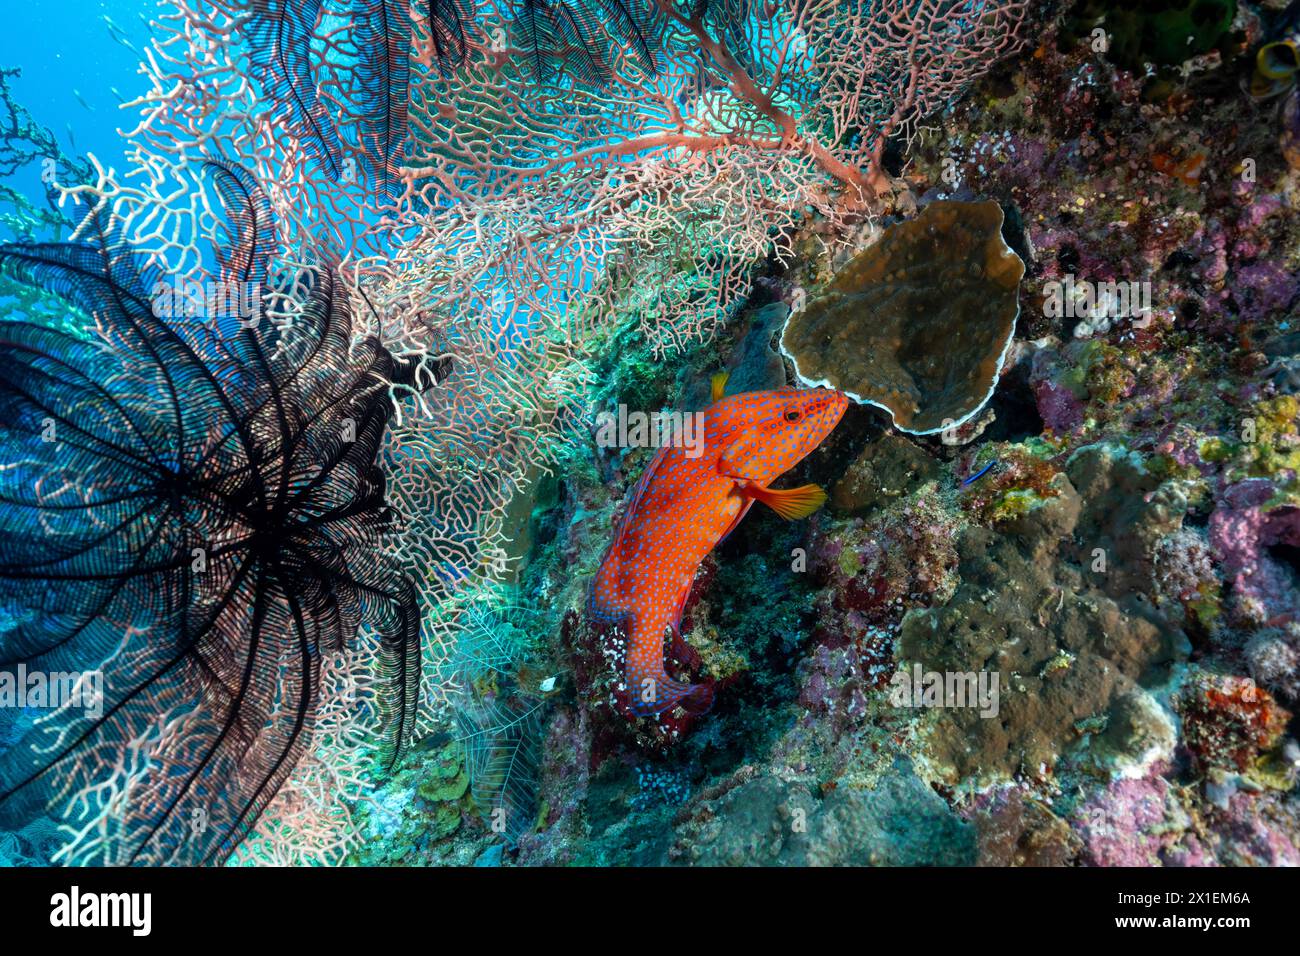 Korallenbarsch, Cephalopholis miniata, zwischen riesigen Meeresfächern, Euplexaura sp., Raja Ampat Indoneia. Stockfoto